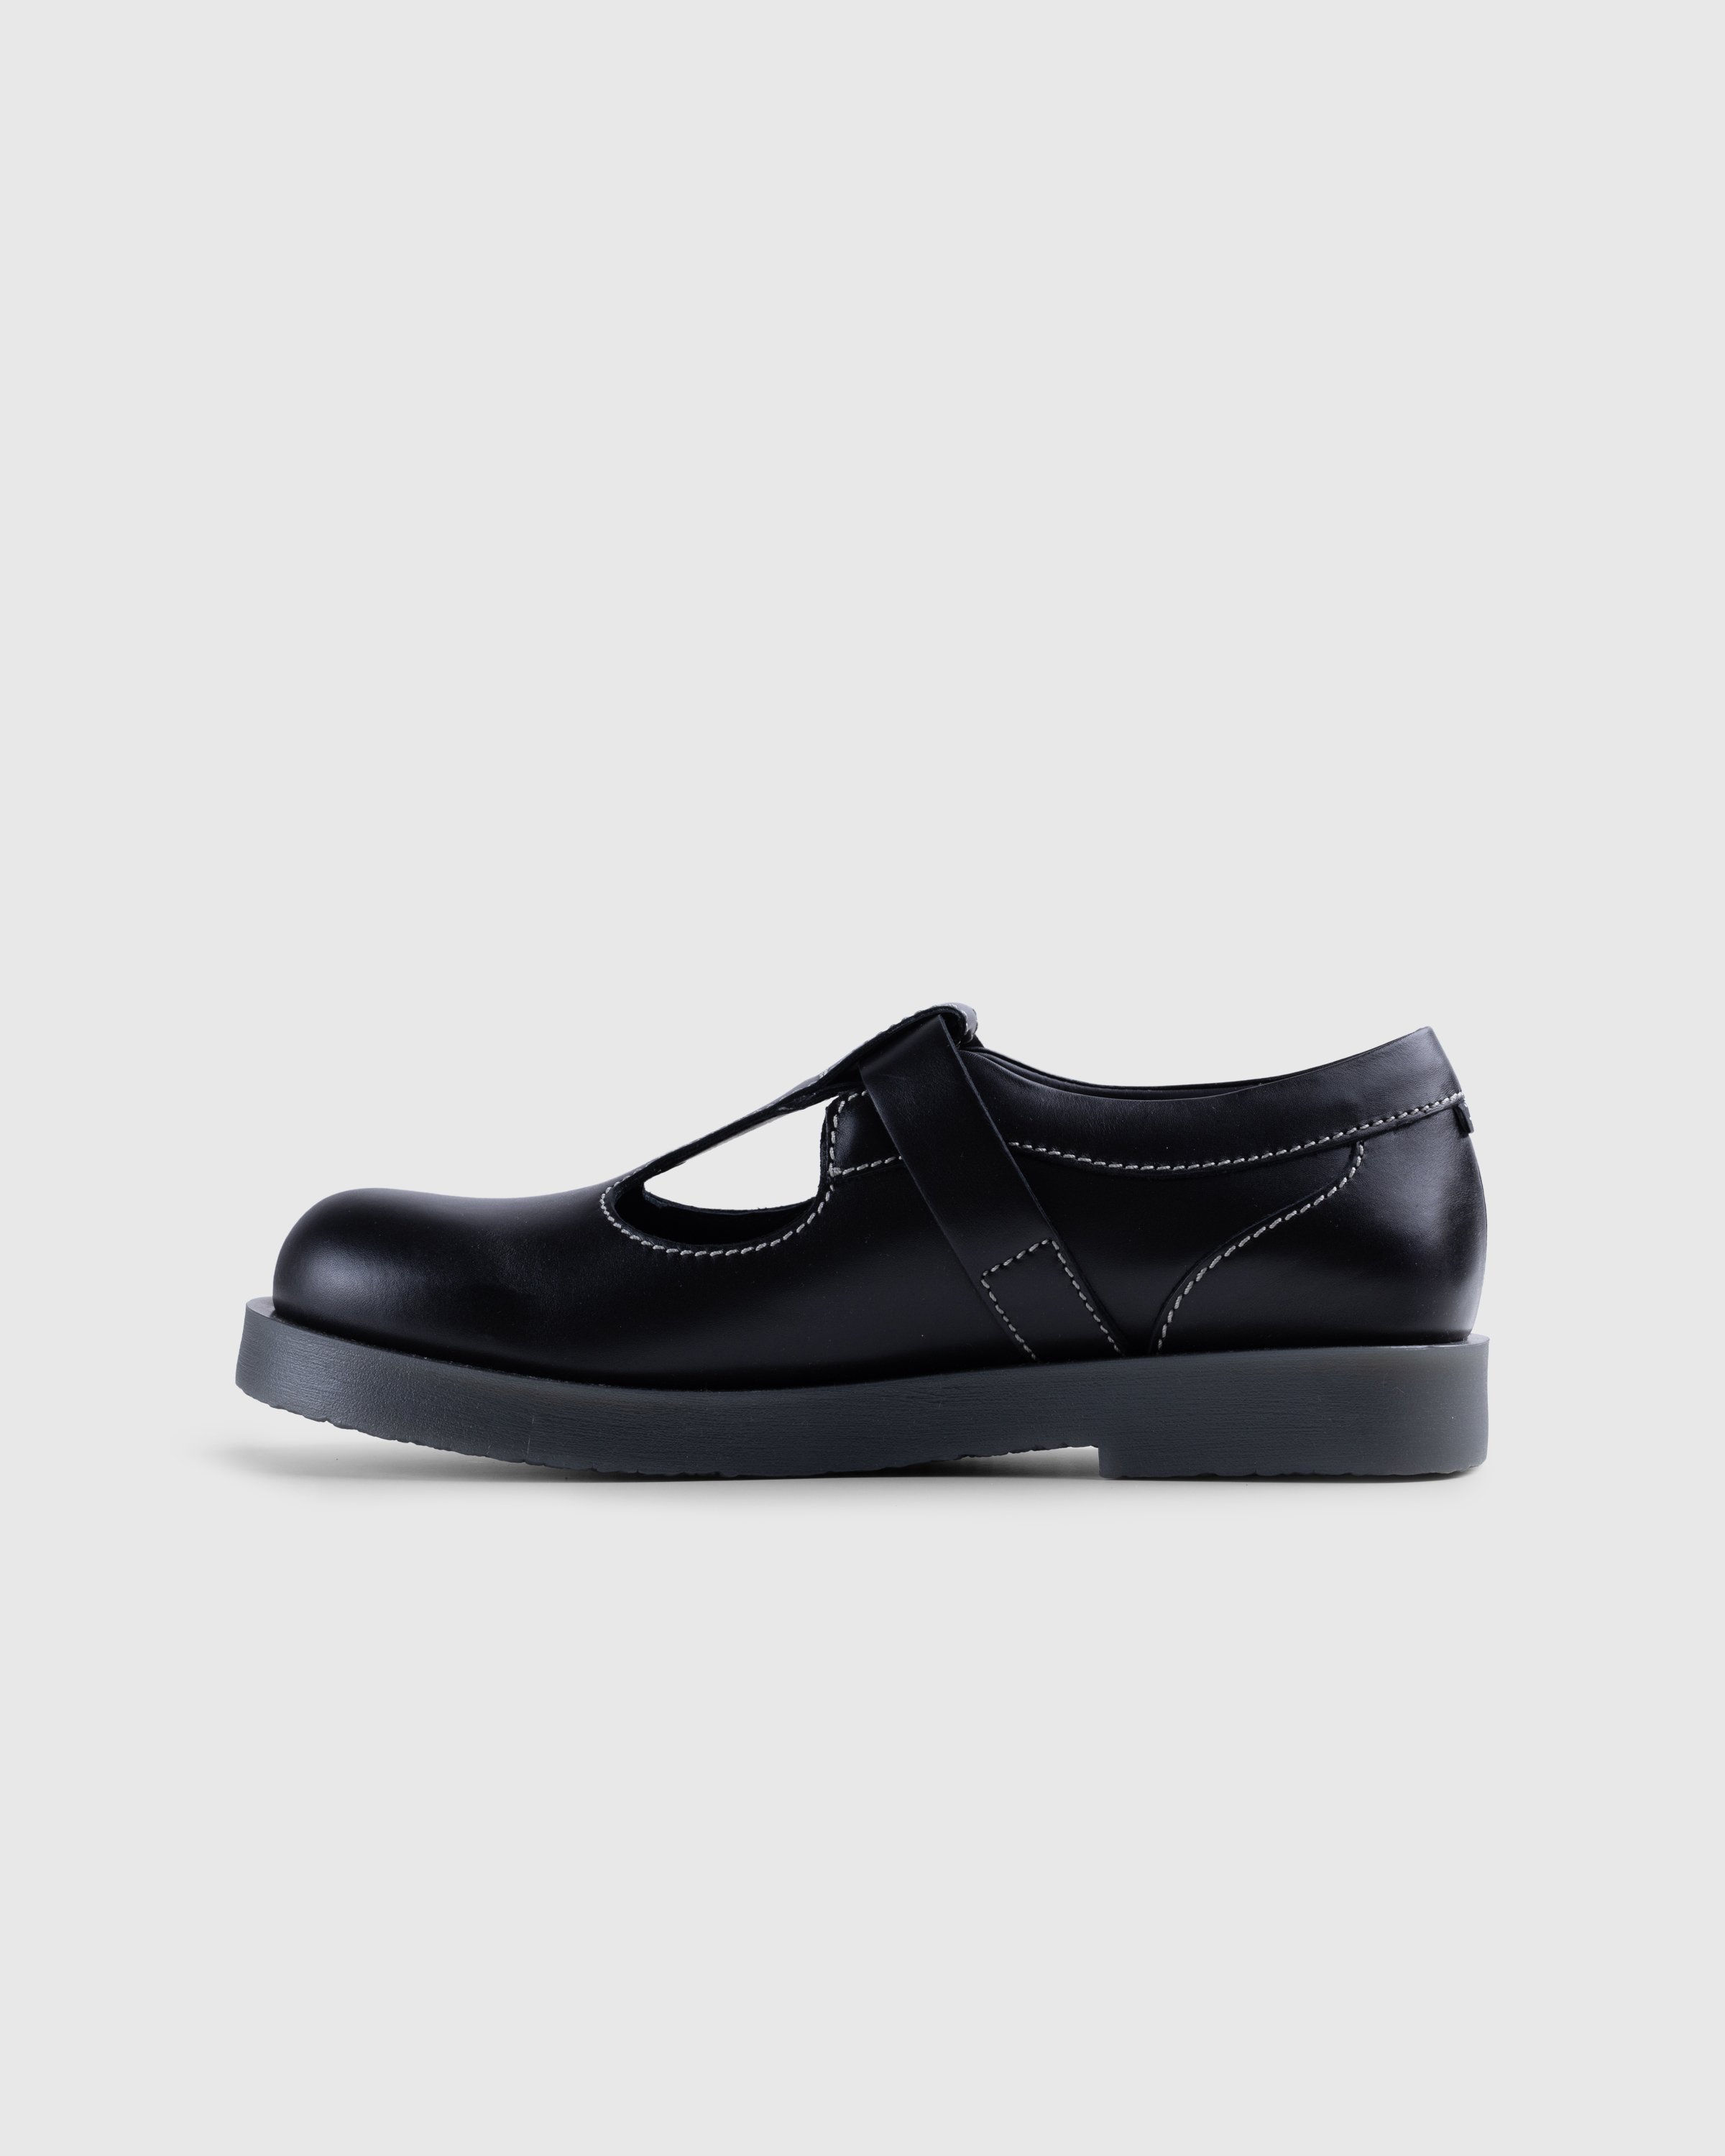 Acne Studios - Berylab Leather Buckle Shoes Black - Footwear - Black - Image 2